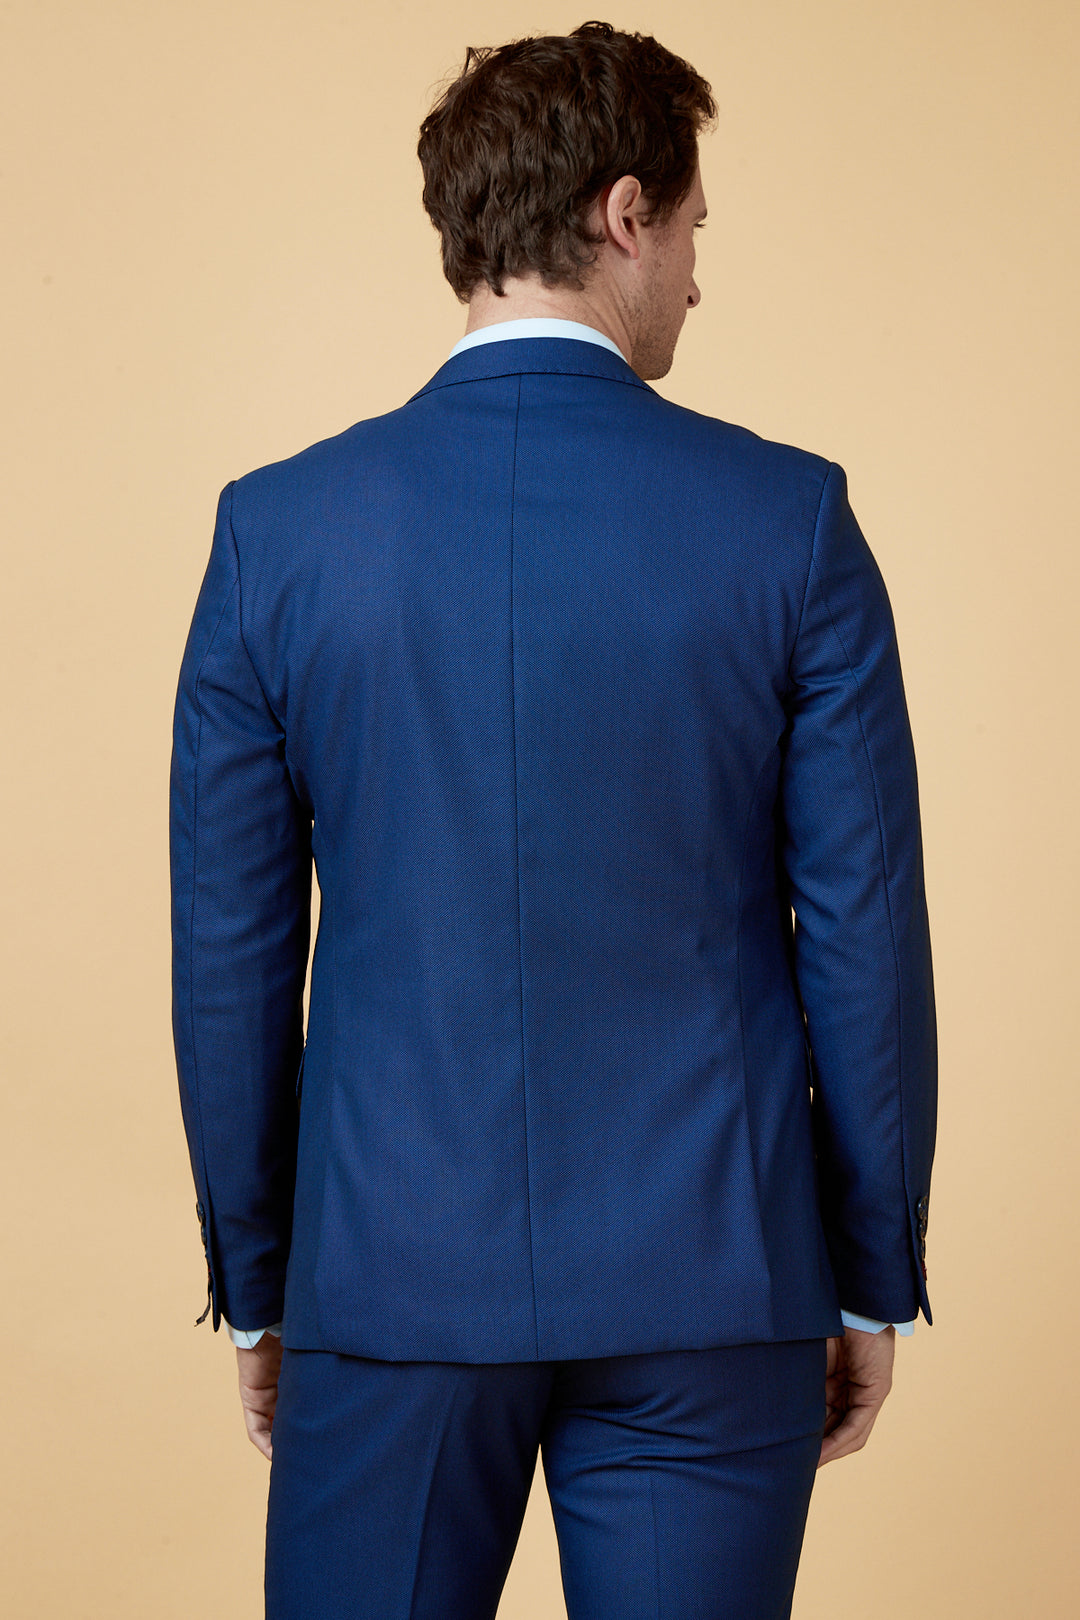 DANNY - Royal Blue Tailored Blazer